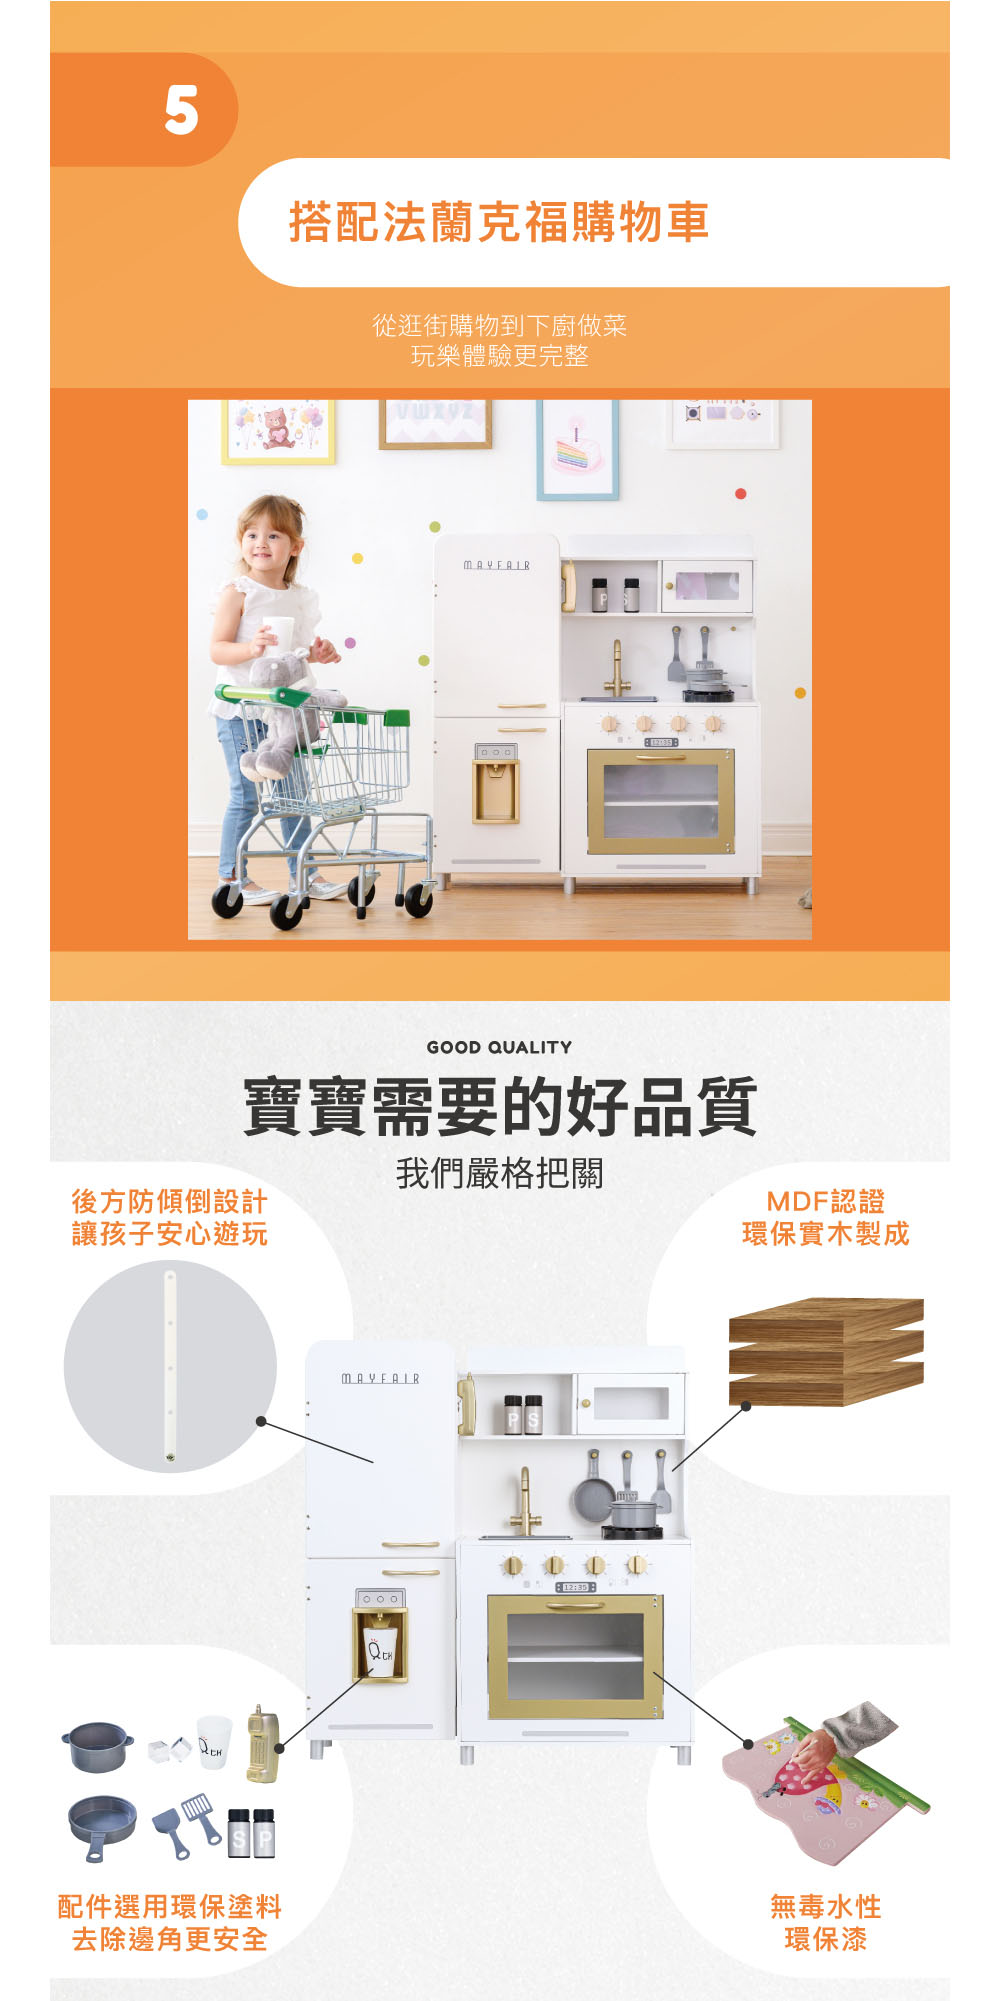 proimages/product/27446-Teamson小廚師梅菲爾復古經典玩具聲光廚房-4.jpg